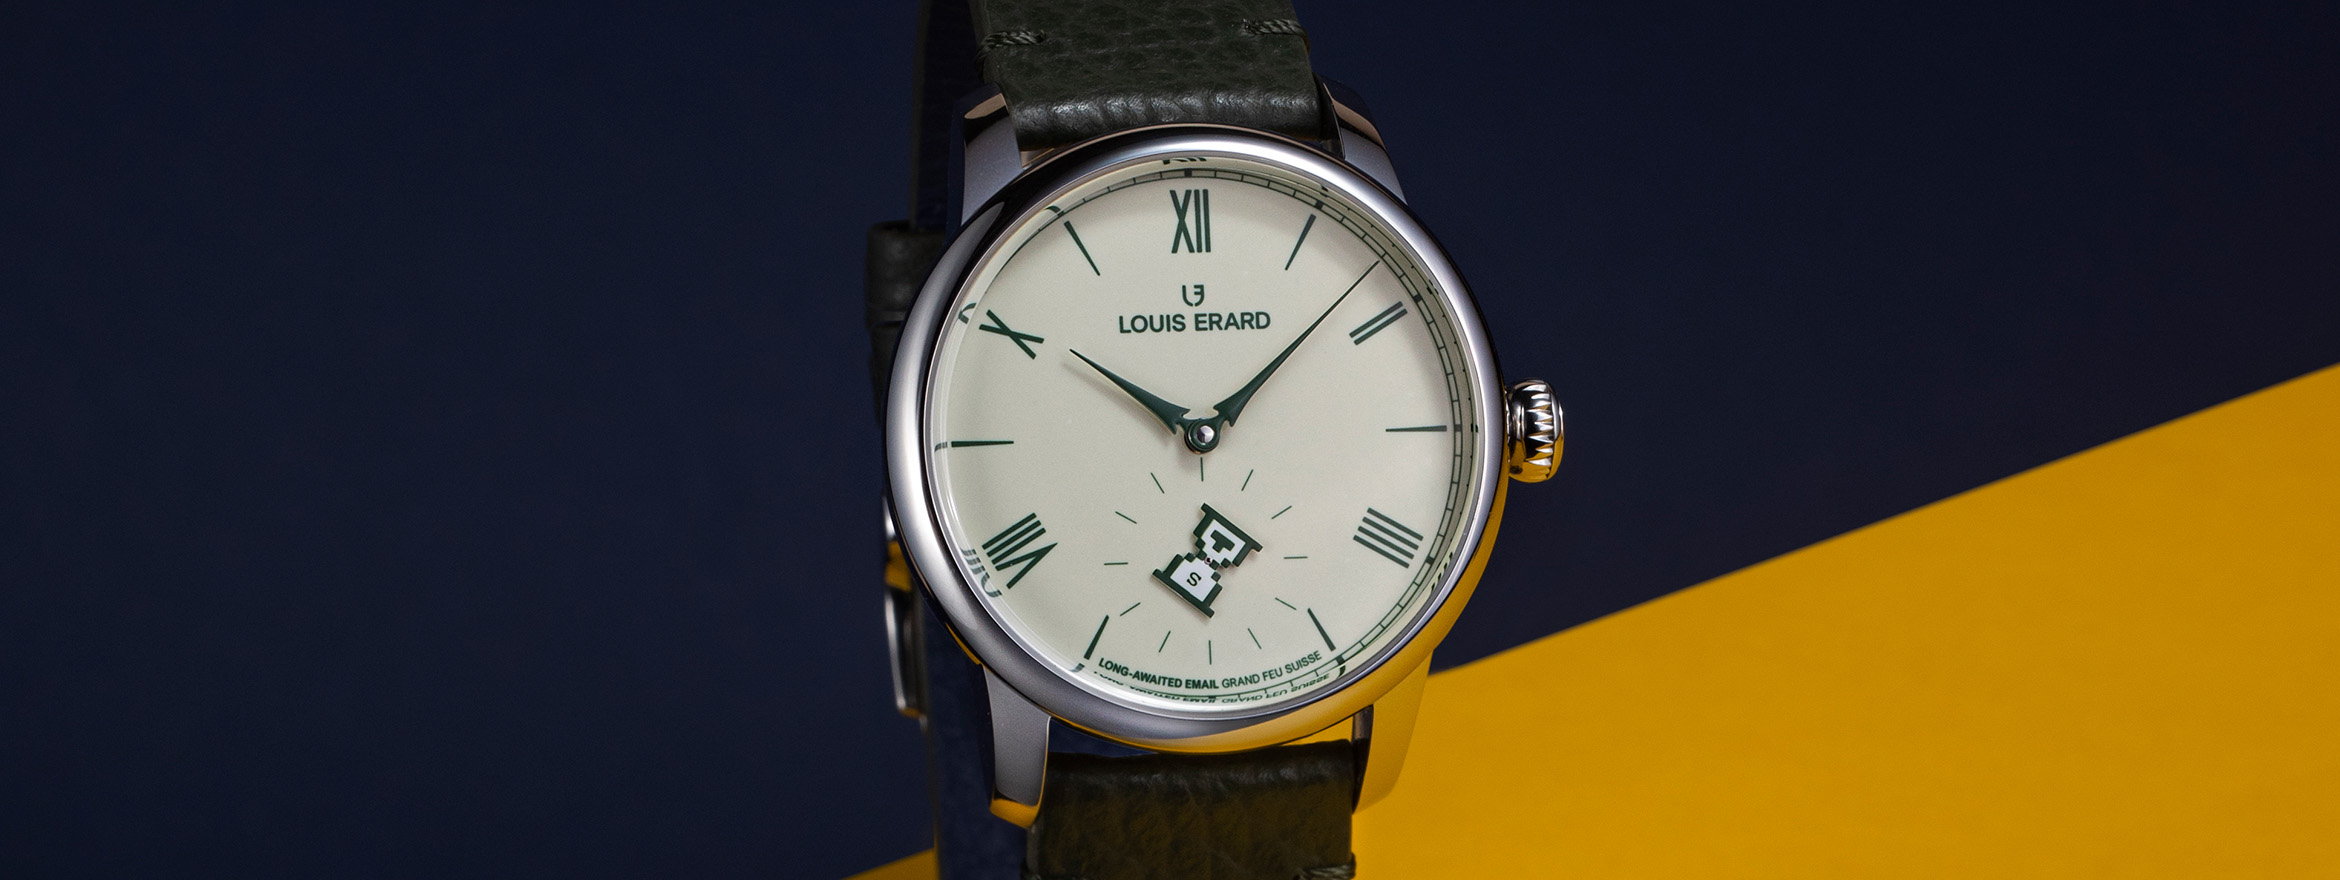 Louis Erard Watches : Buy Louis Erard Excellence Analog Dial Color